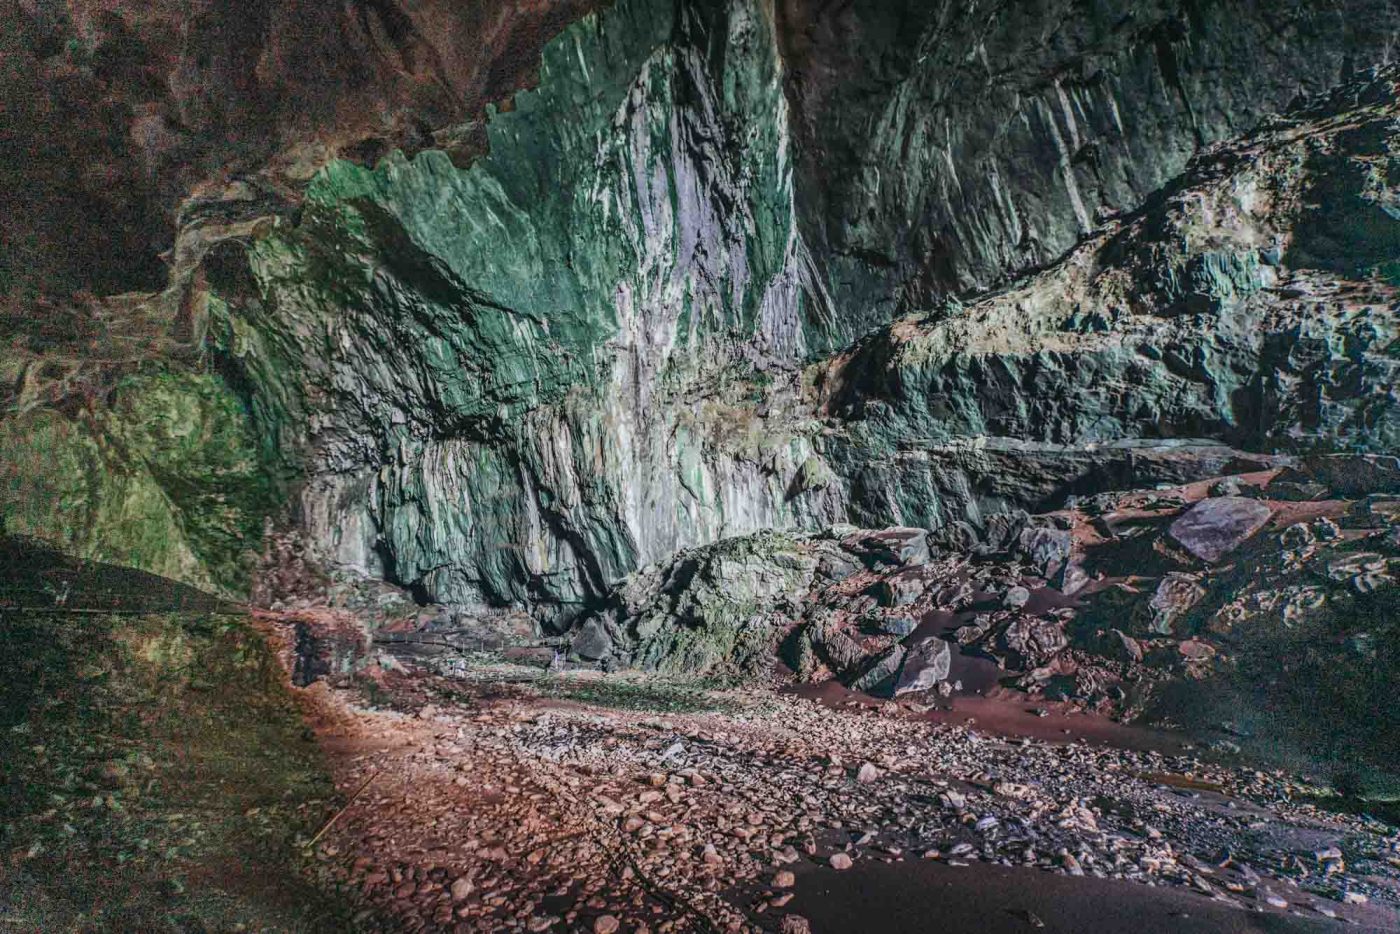 Inside the Deer Cave in Gunung Mulu National Park, Sarawak